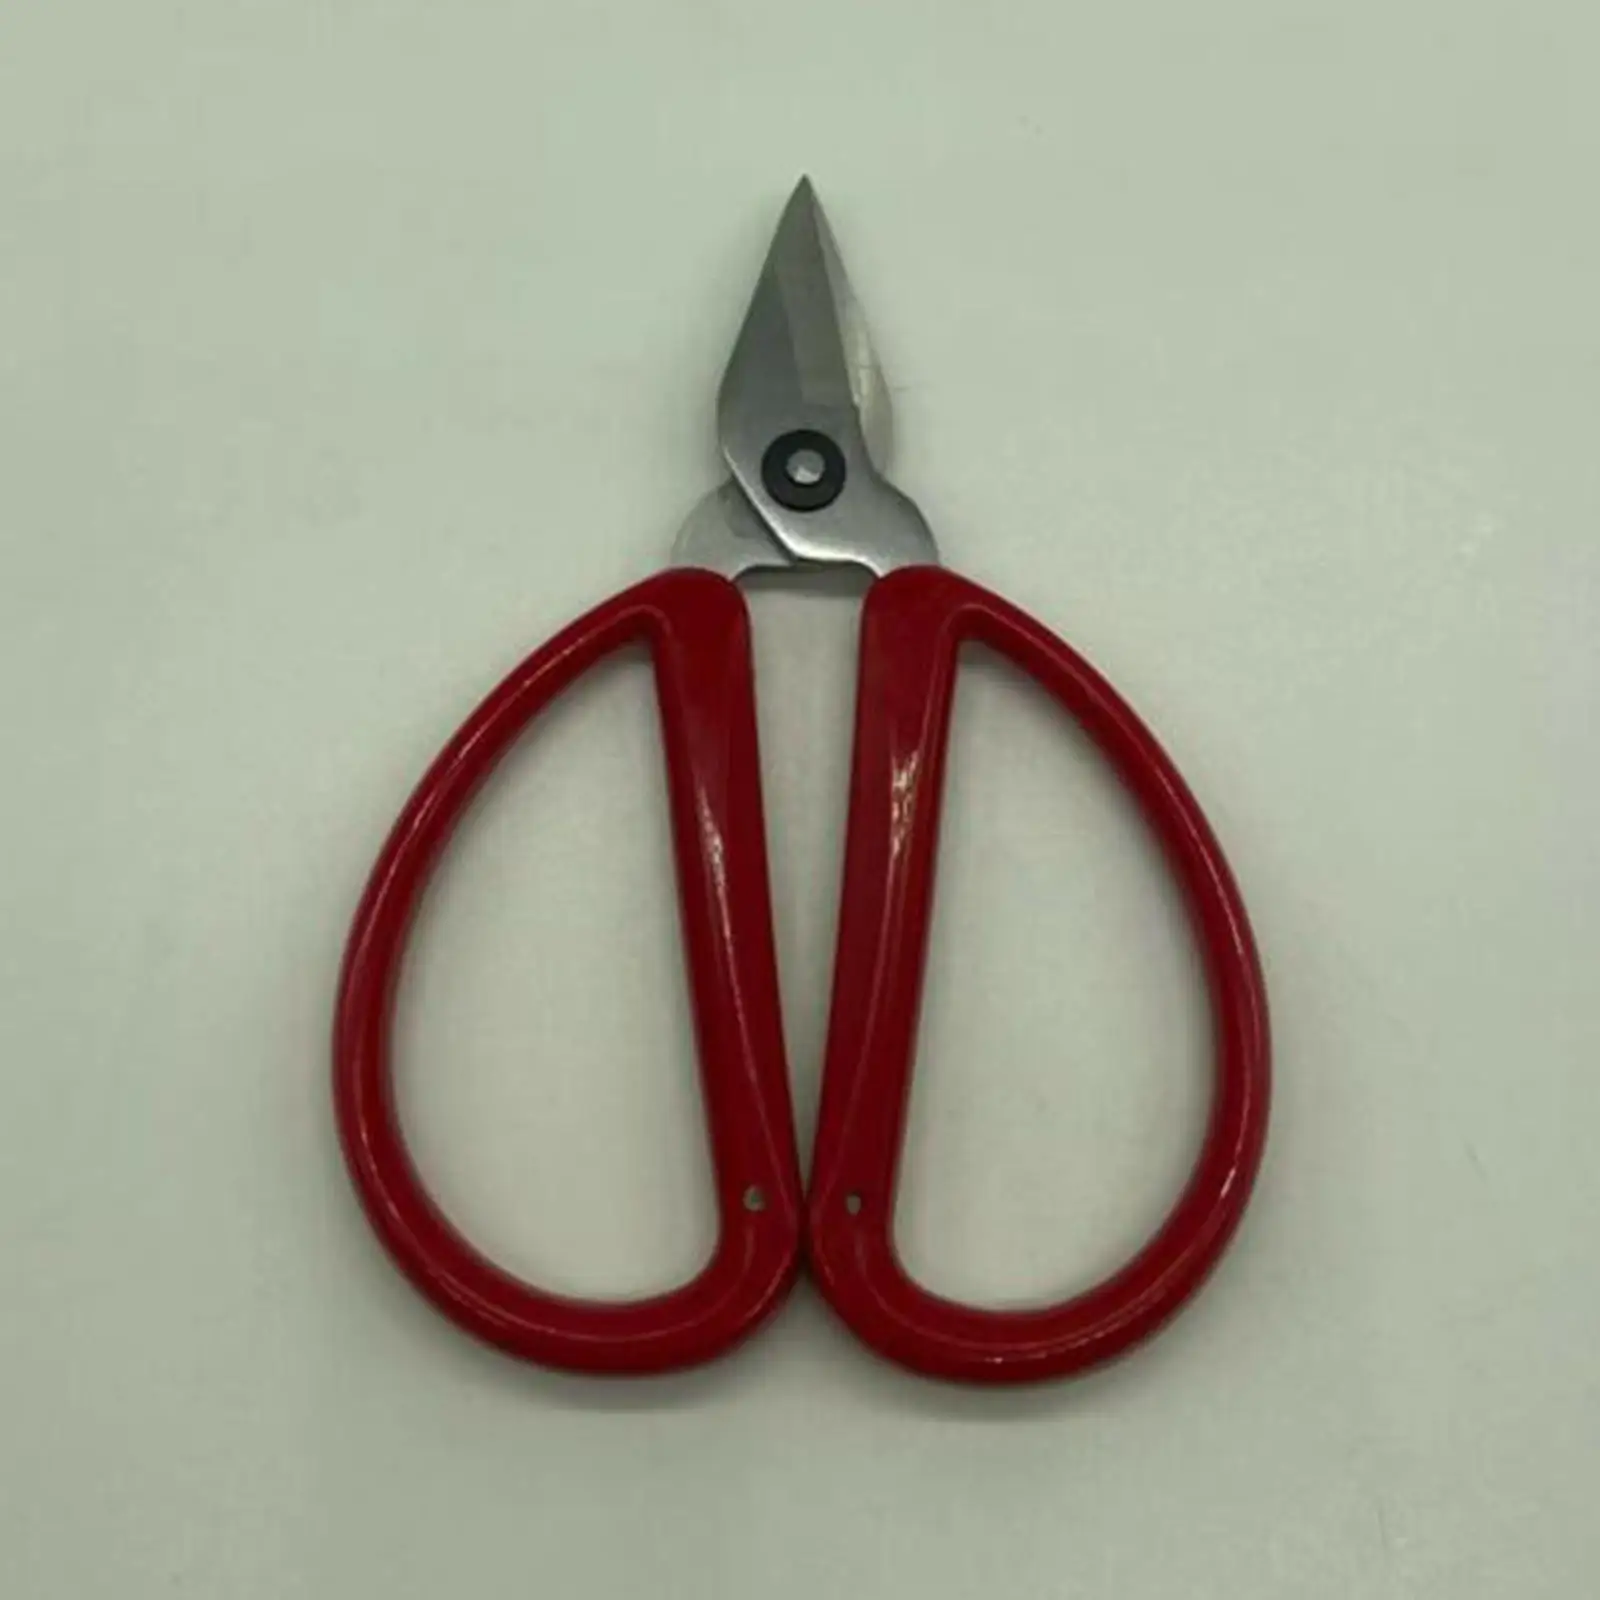 Diagonal Cutting Scissors Portable Repairing Tennis Racket Wire Cutter